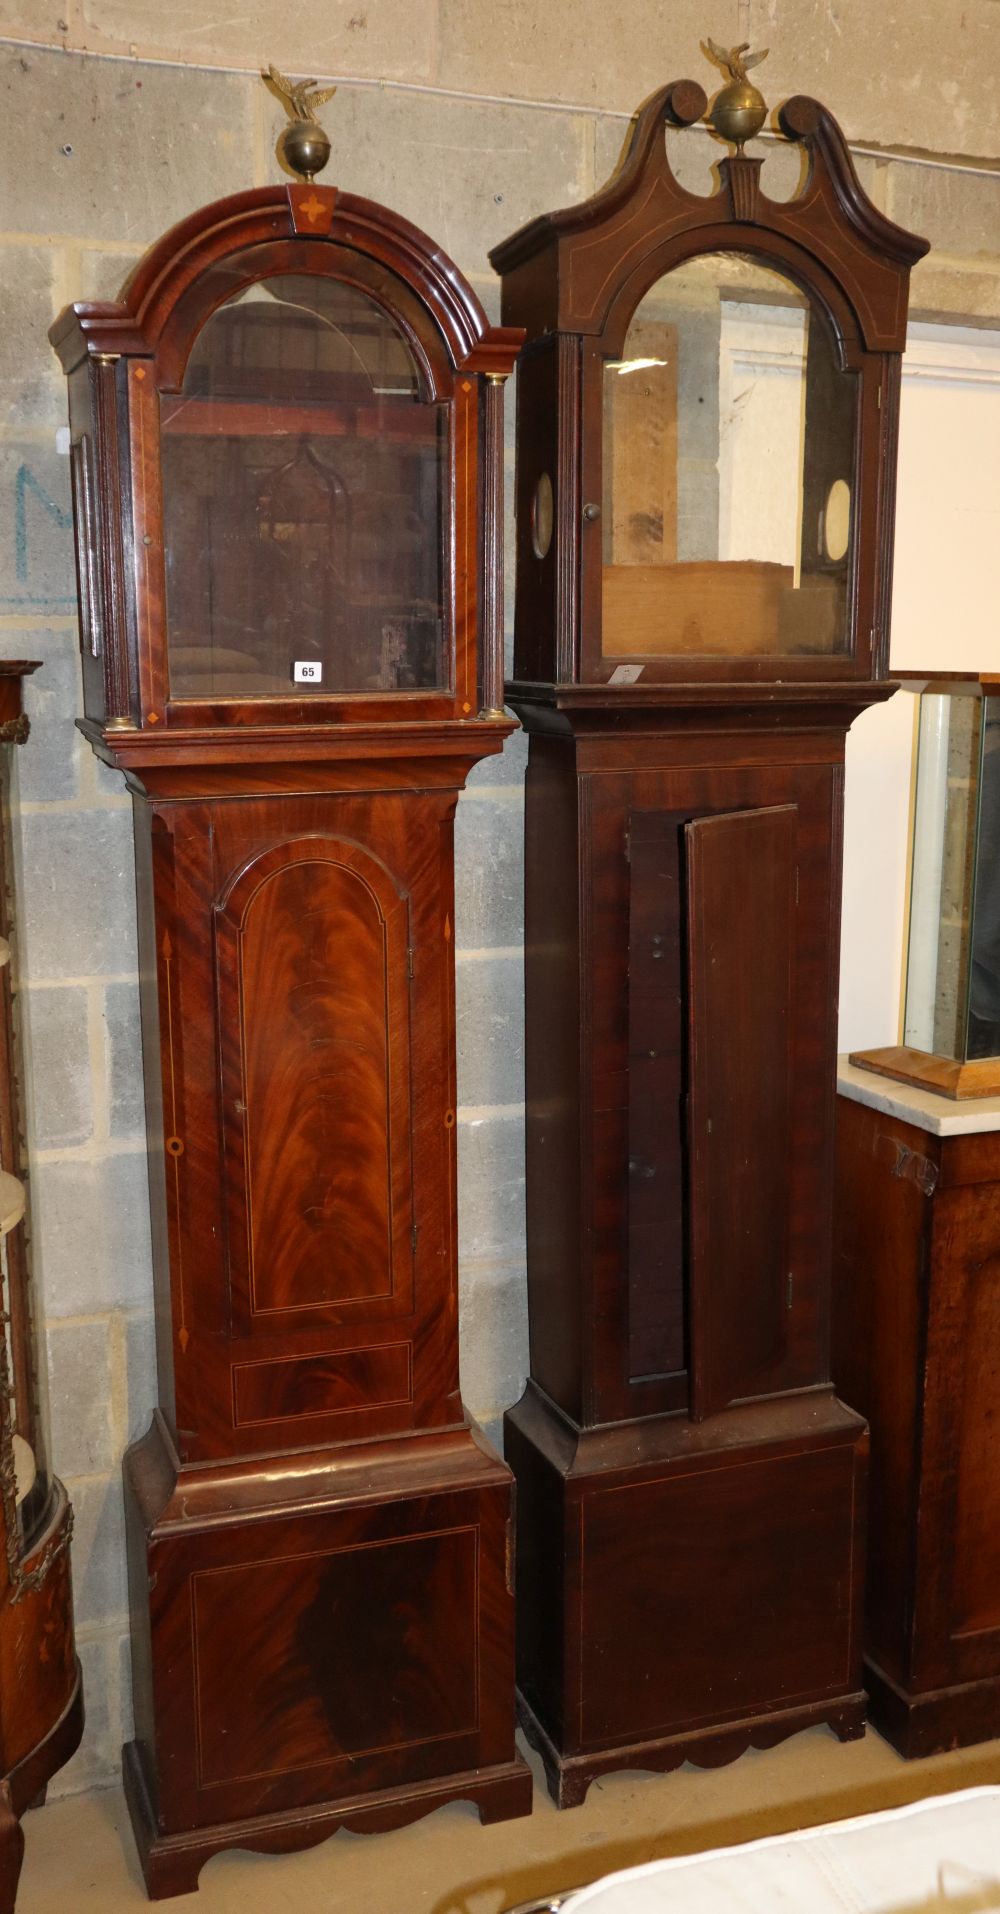 Two George III mahogany longcase clock cases, larger W.48cm, D.24cm, H.221cm